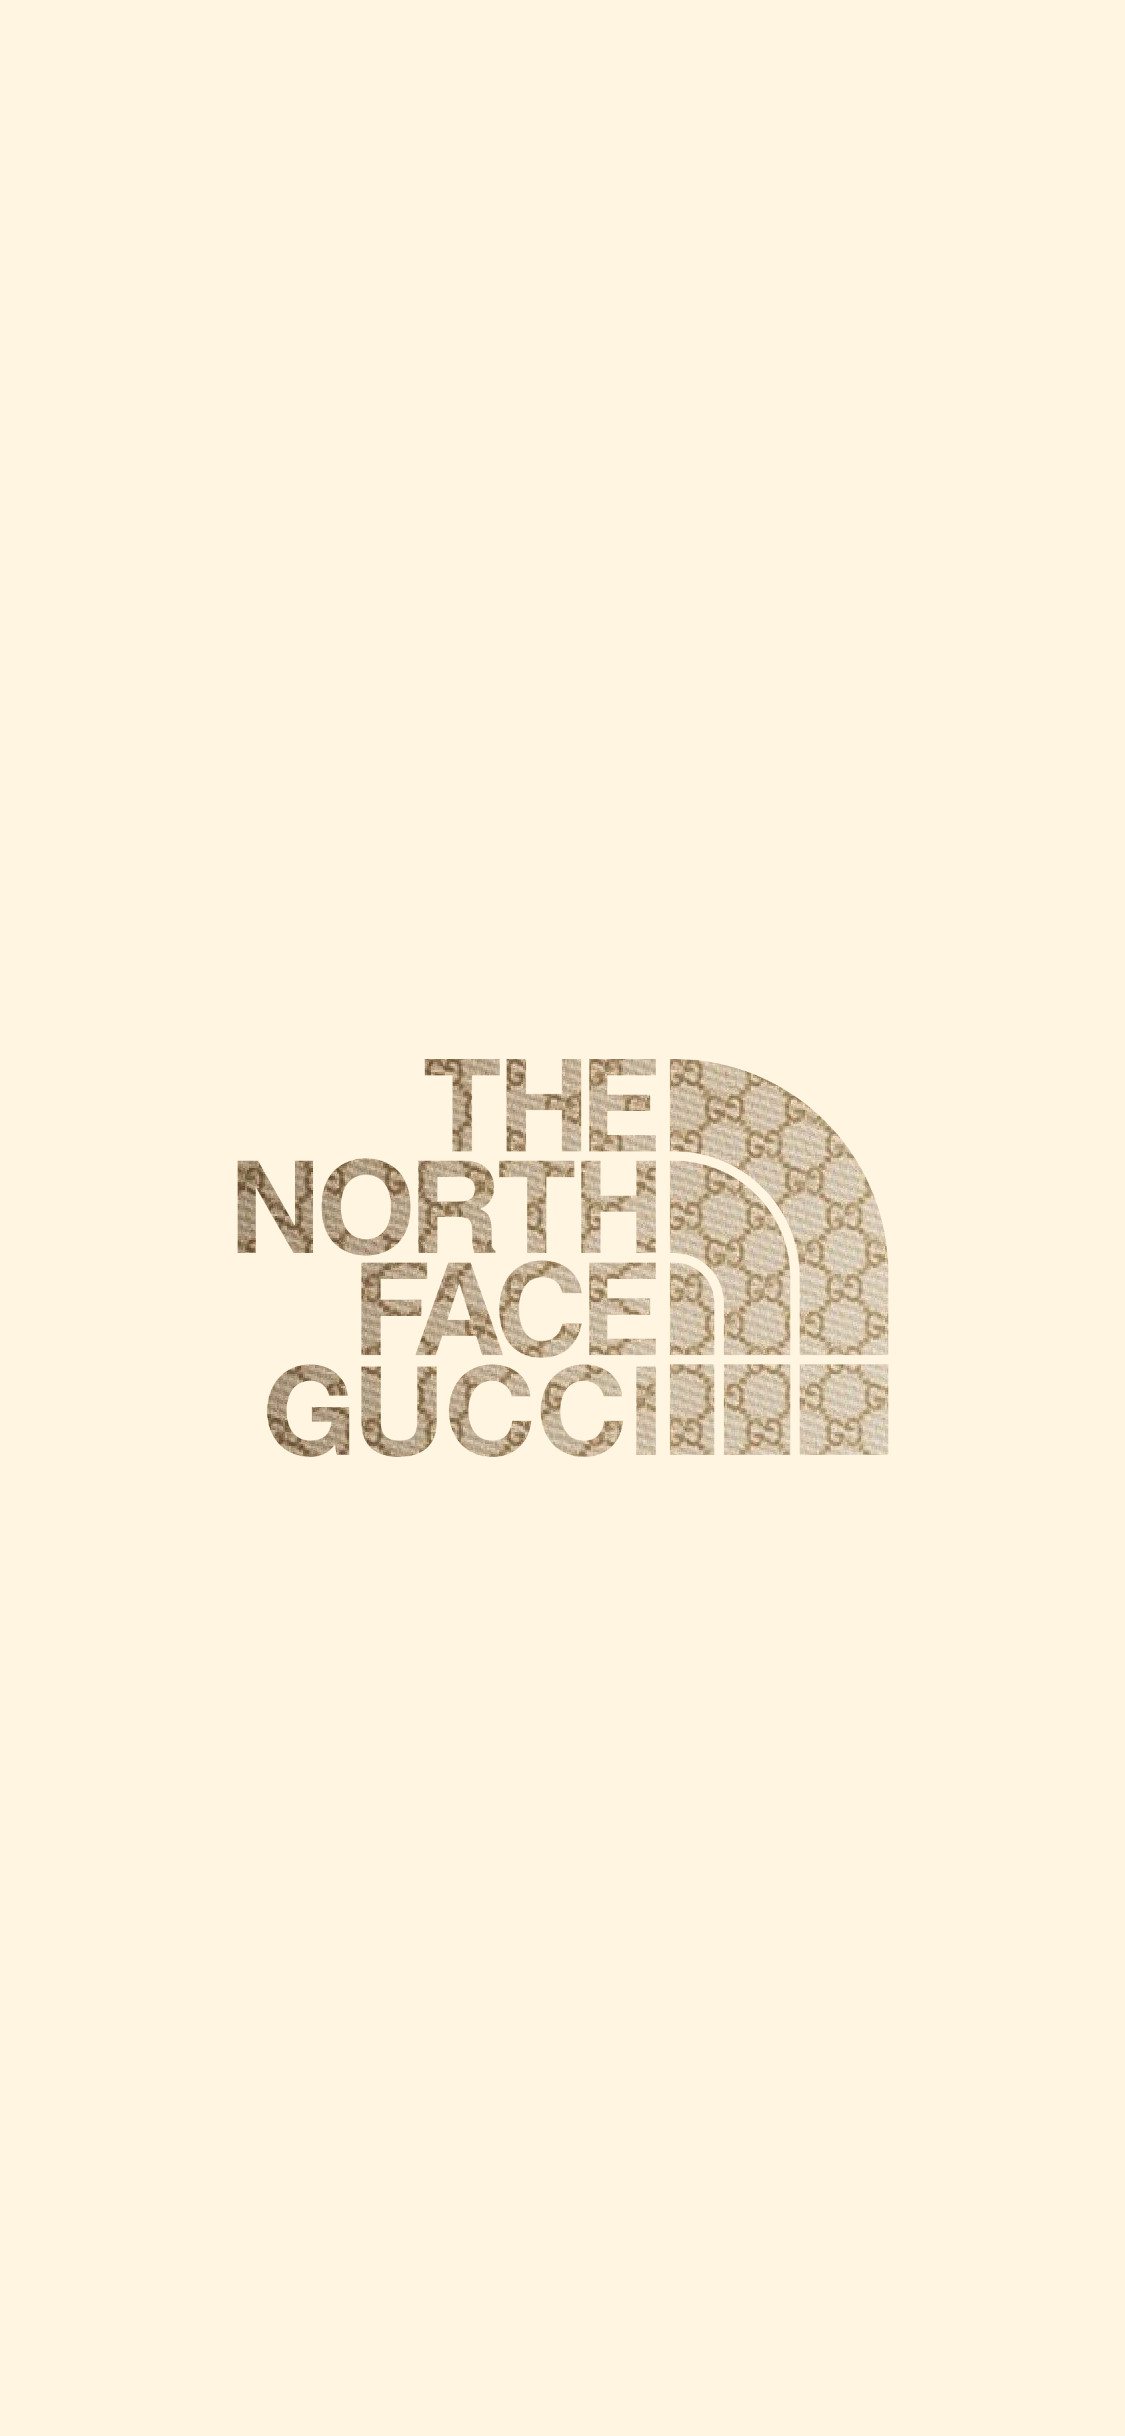 The North Face X Gucciの無料高画質スマホ壁紙23枚 エモい スマホ壁紙辞典